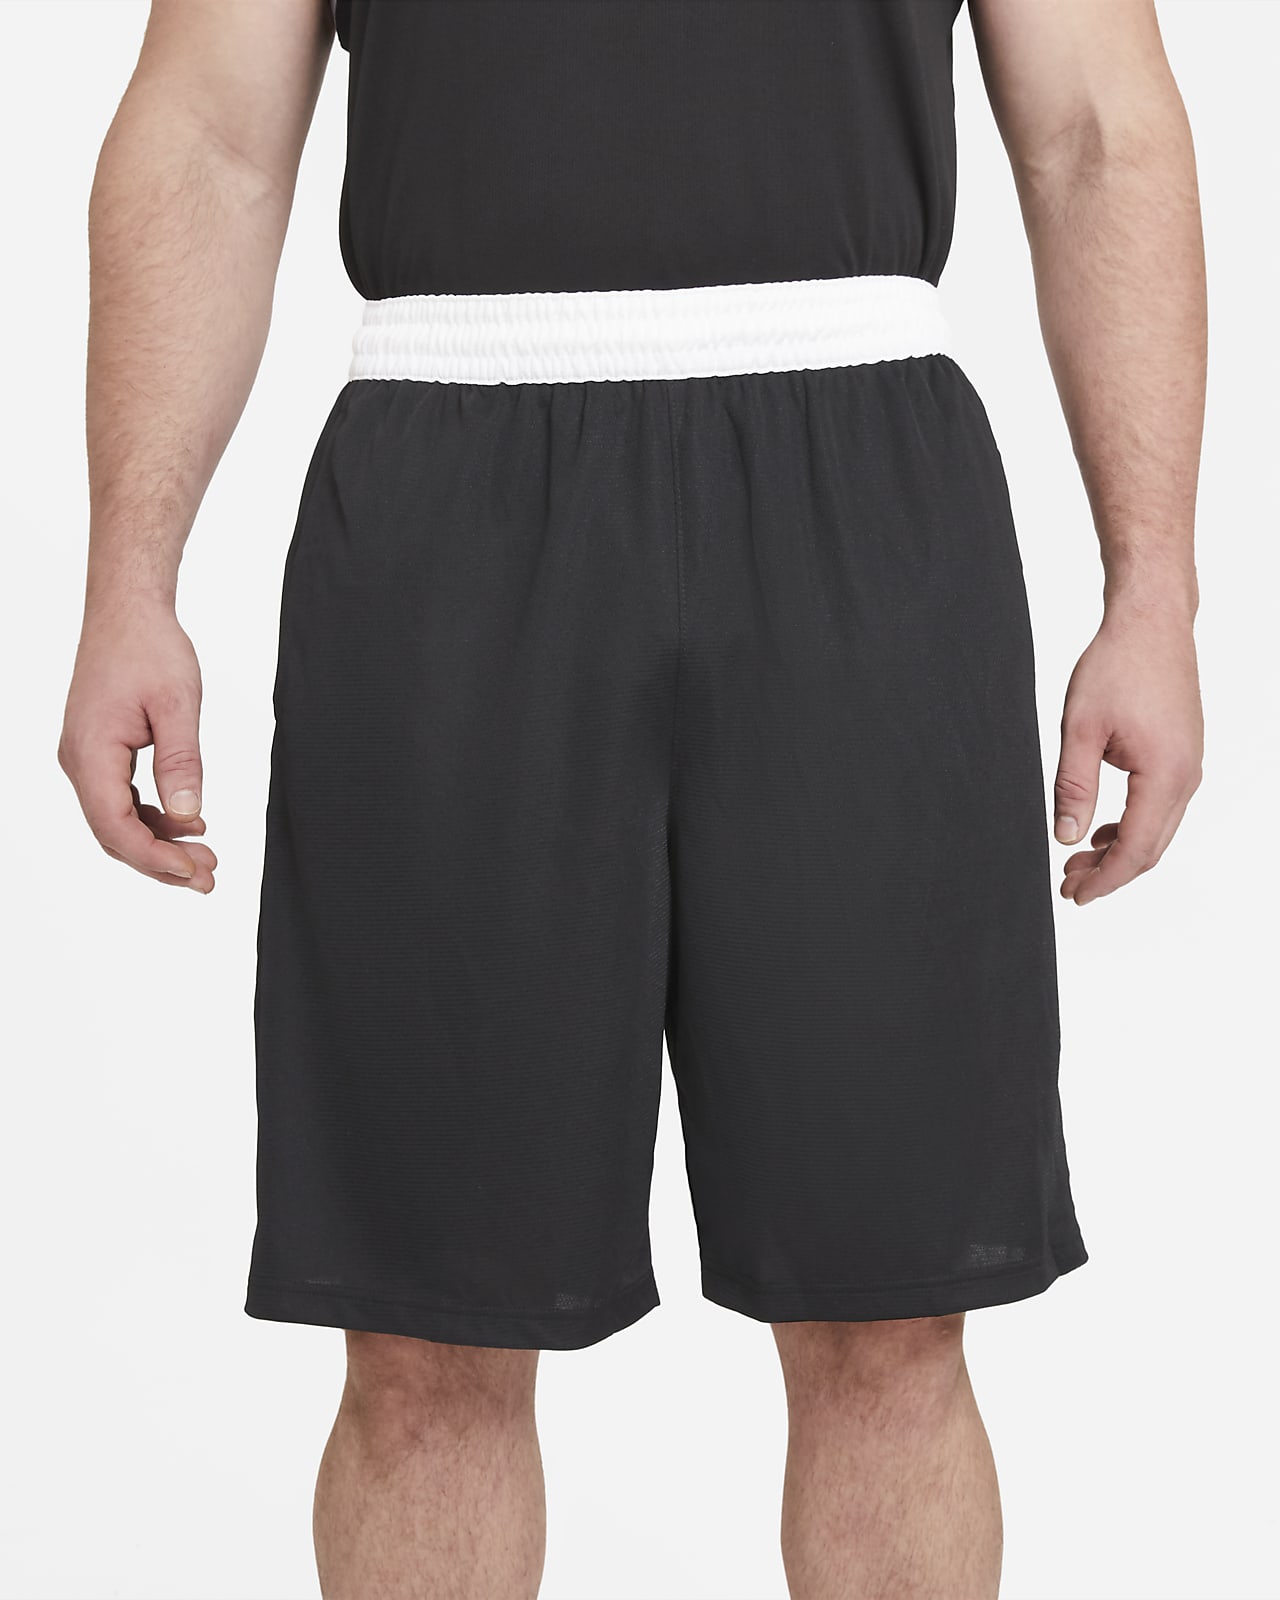 mens black nike basketball shorts